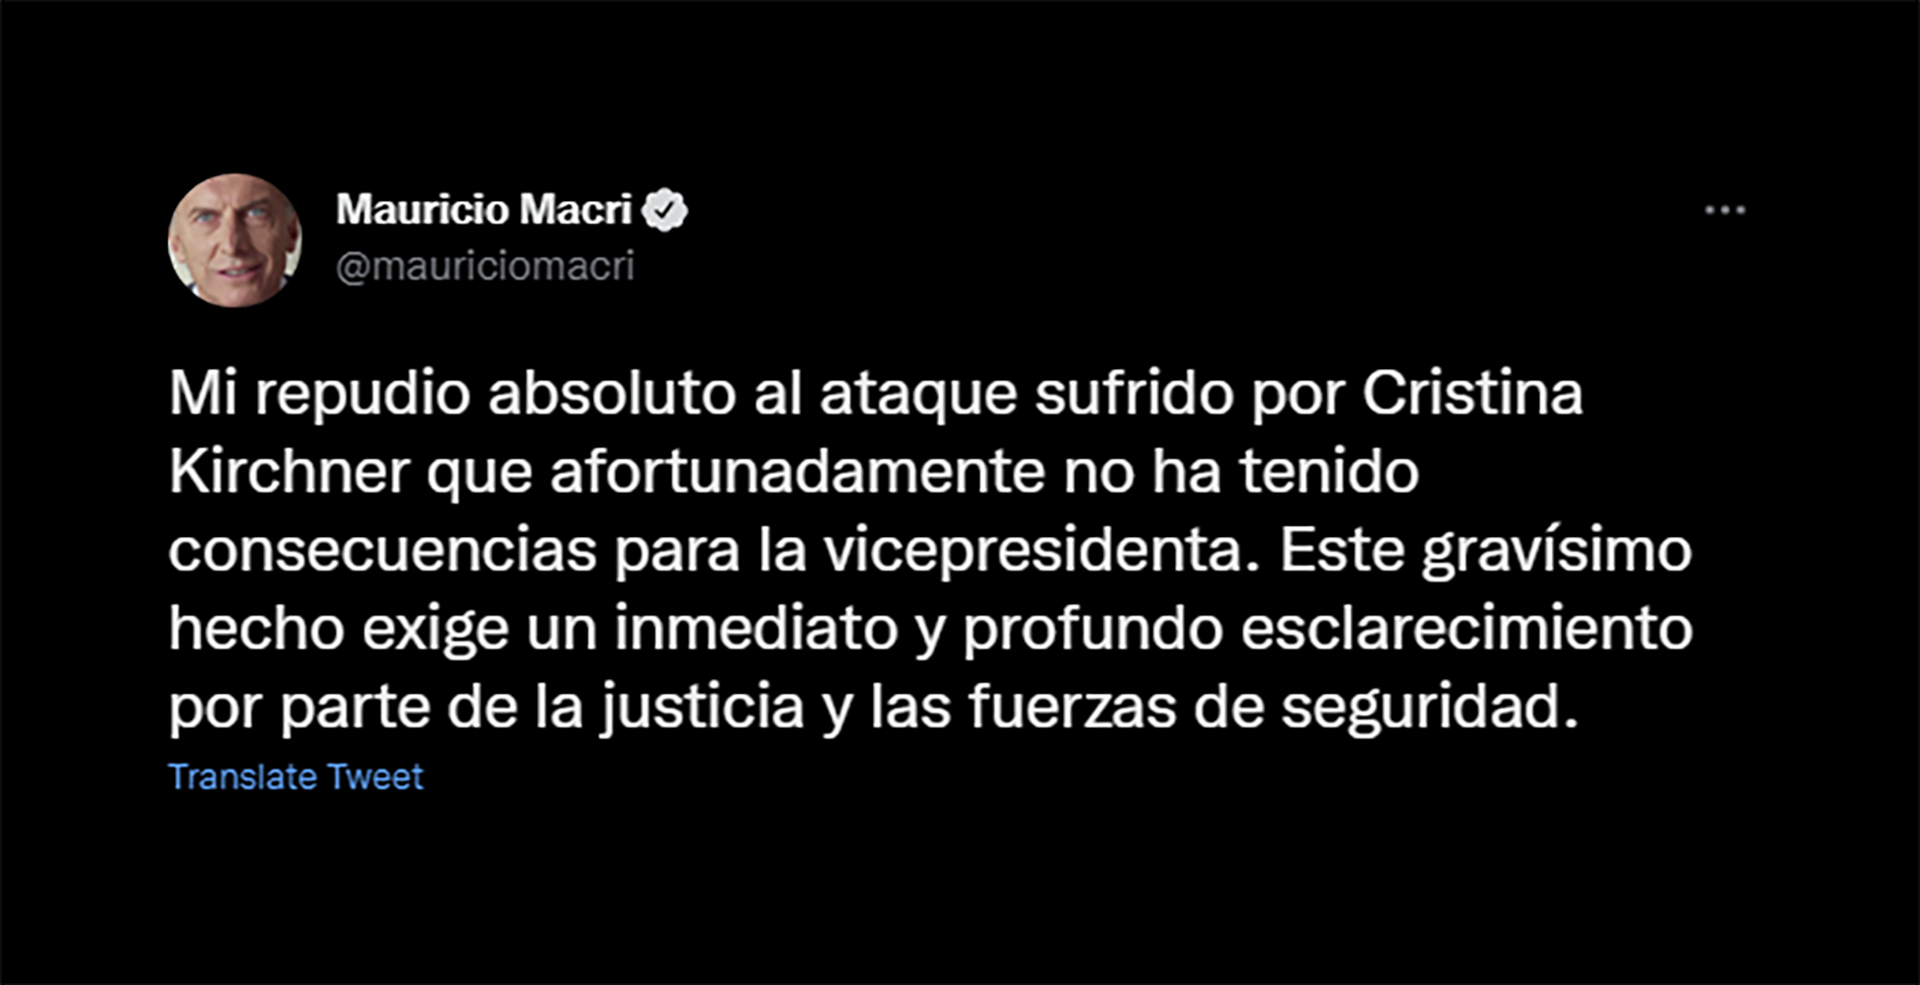 Tuit de Mauricio Macri condenando el ataque fallido contra Cristina Fernández de Kirchner